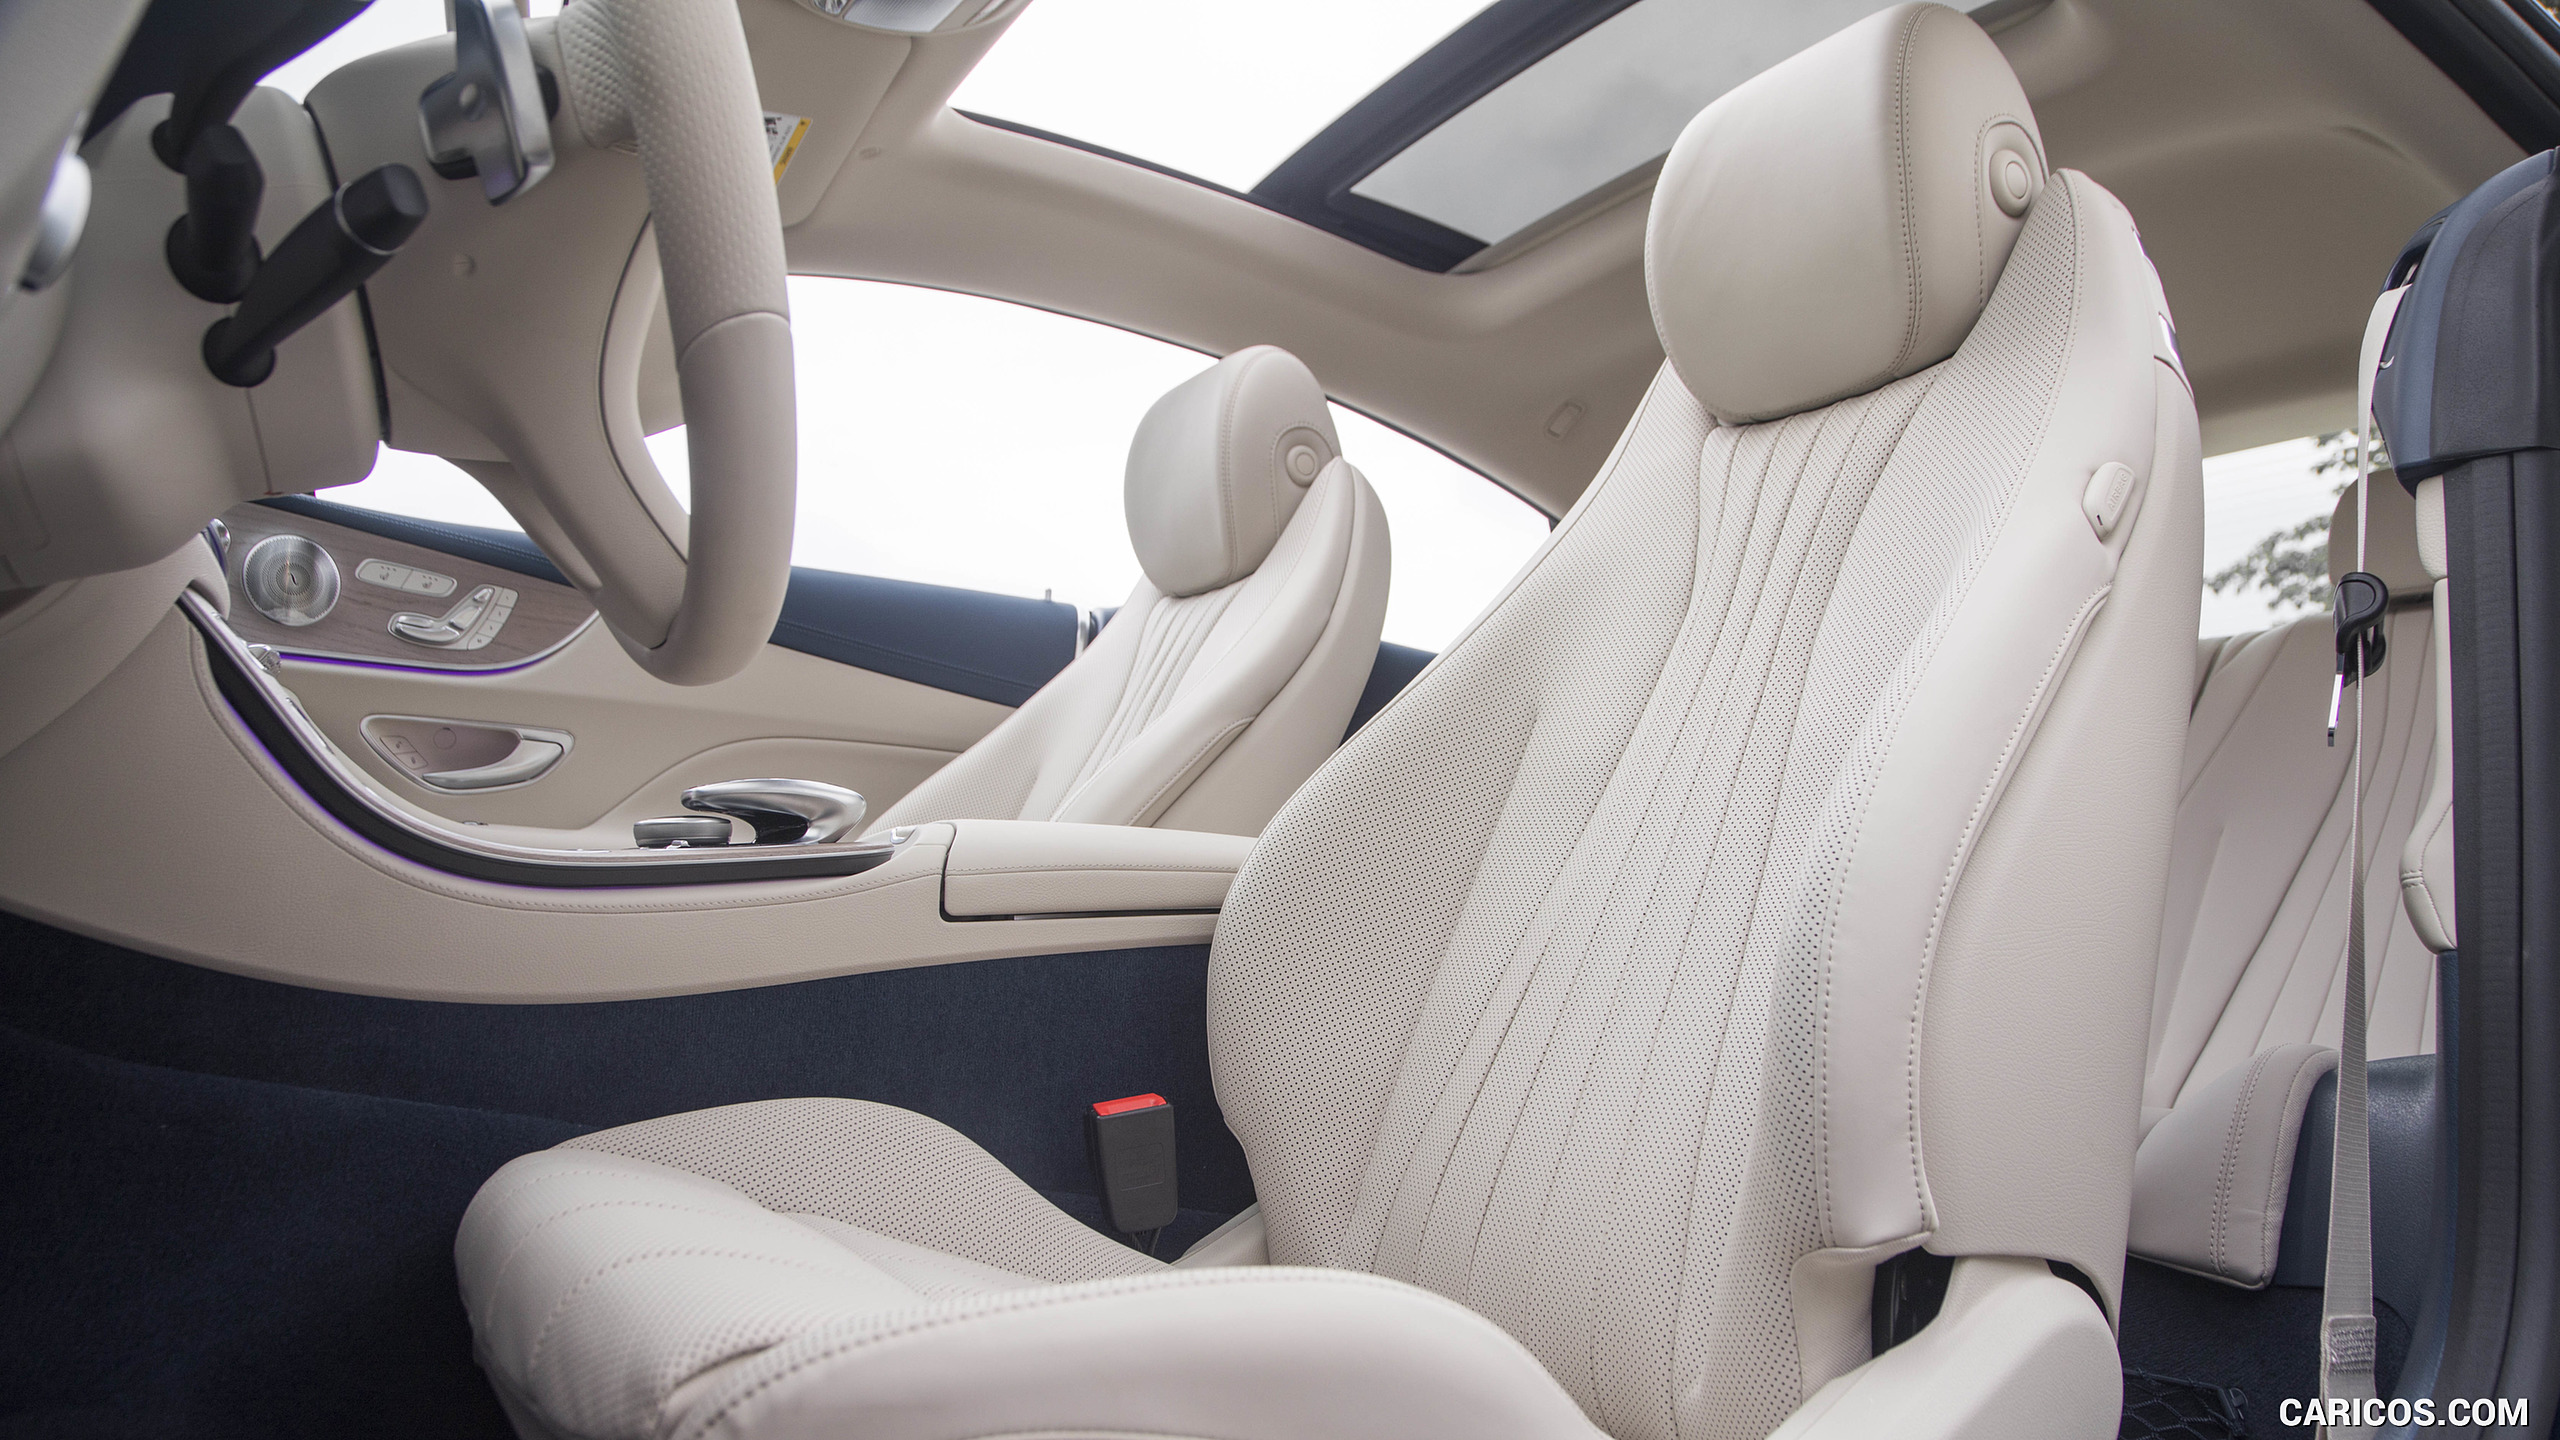 2018 Mercedes-Benz E-Class E400 4MATIC Coupe (US-Spec) - Interior, Front Seats, #360 of 365